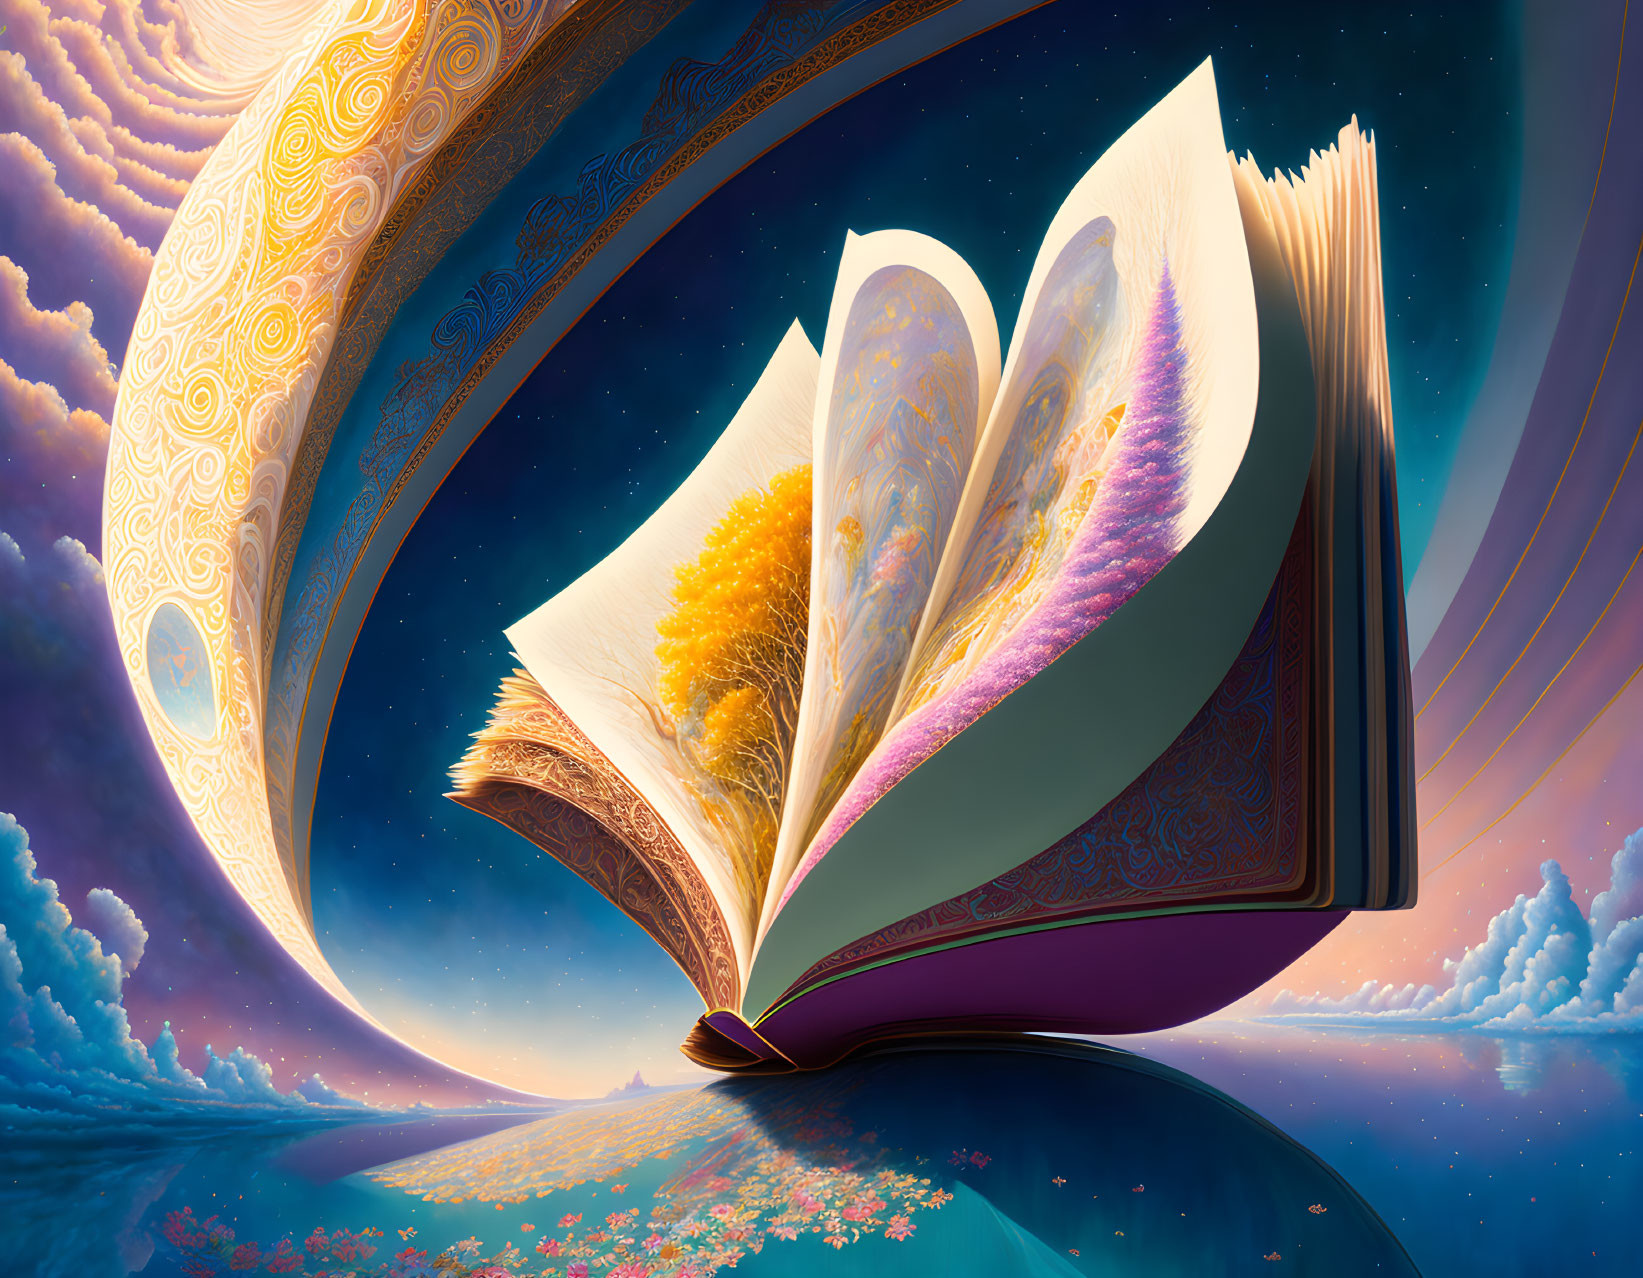 Fantasy illustration of open book transforming into vivid landscape.